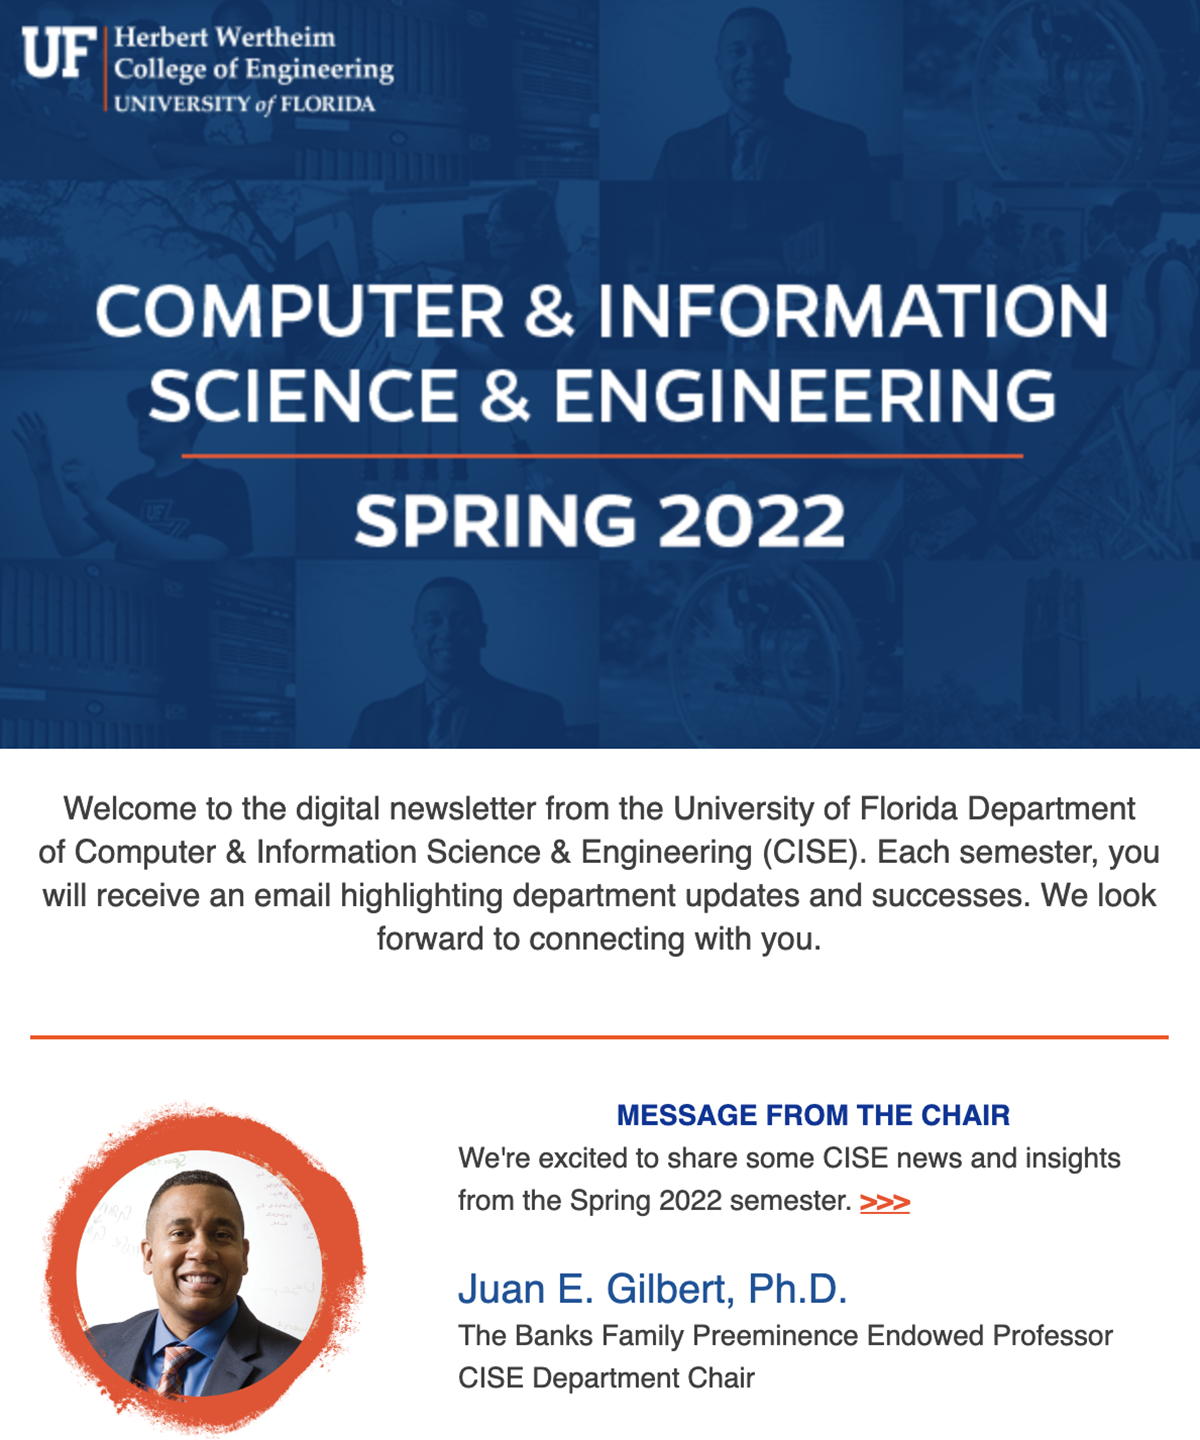 UF CISE Spring 2022 Digital Newsletter